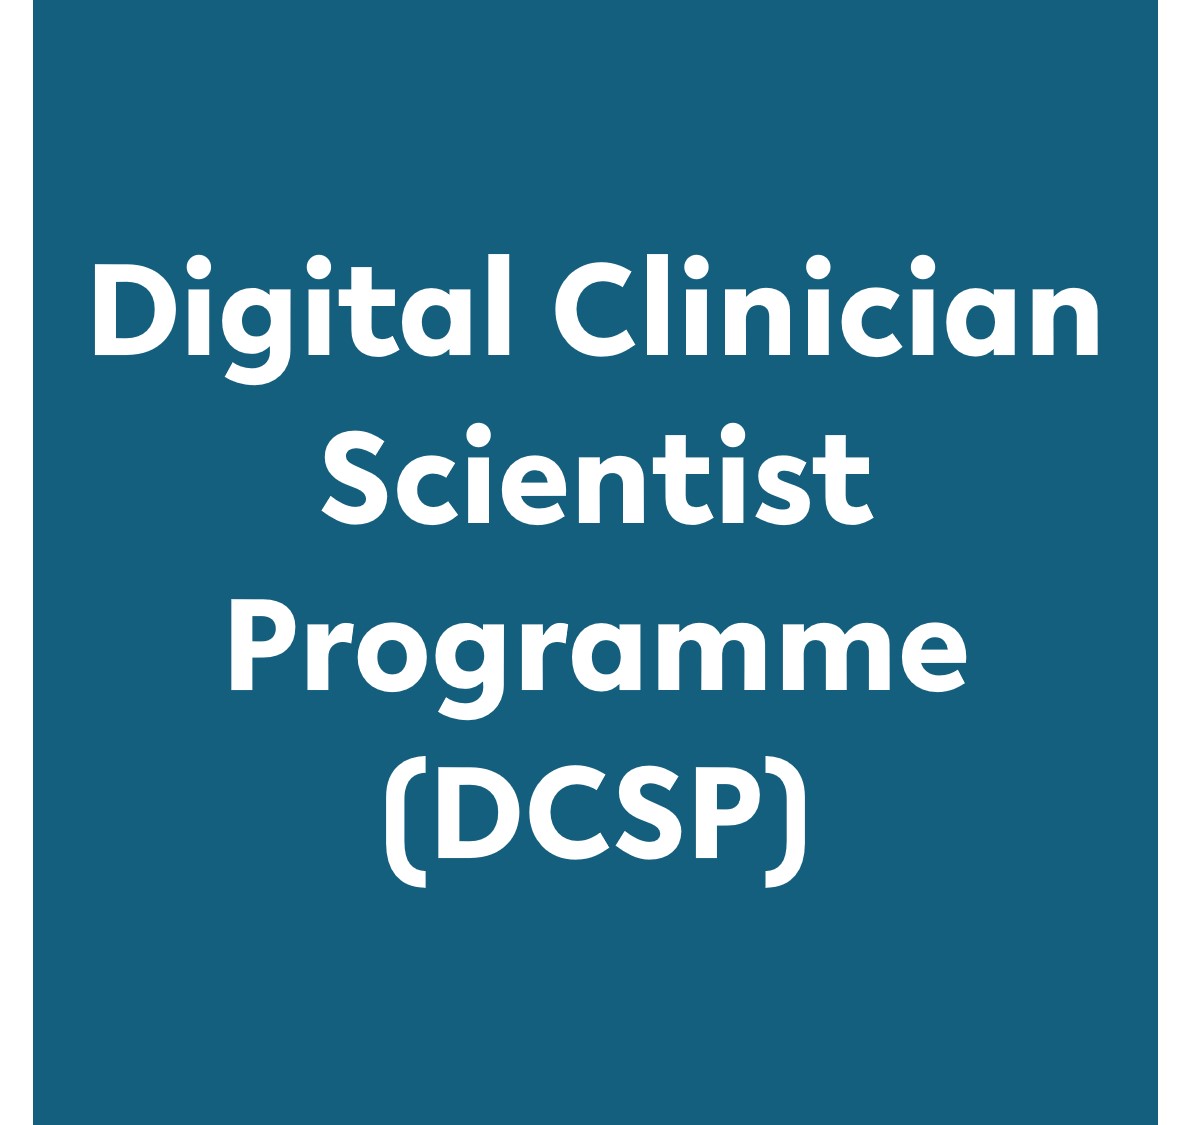 Digital Clinician Scientist Programme (DCSP)